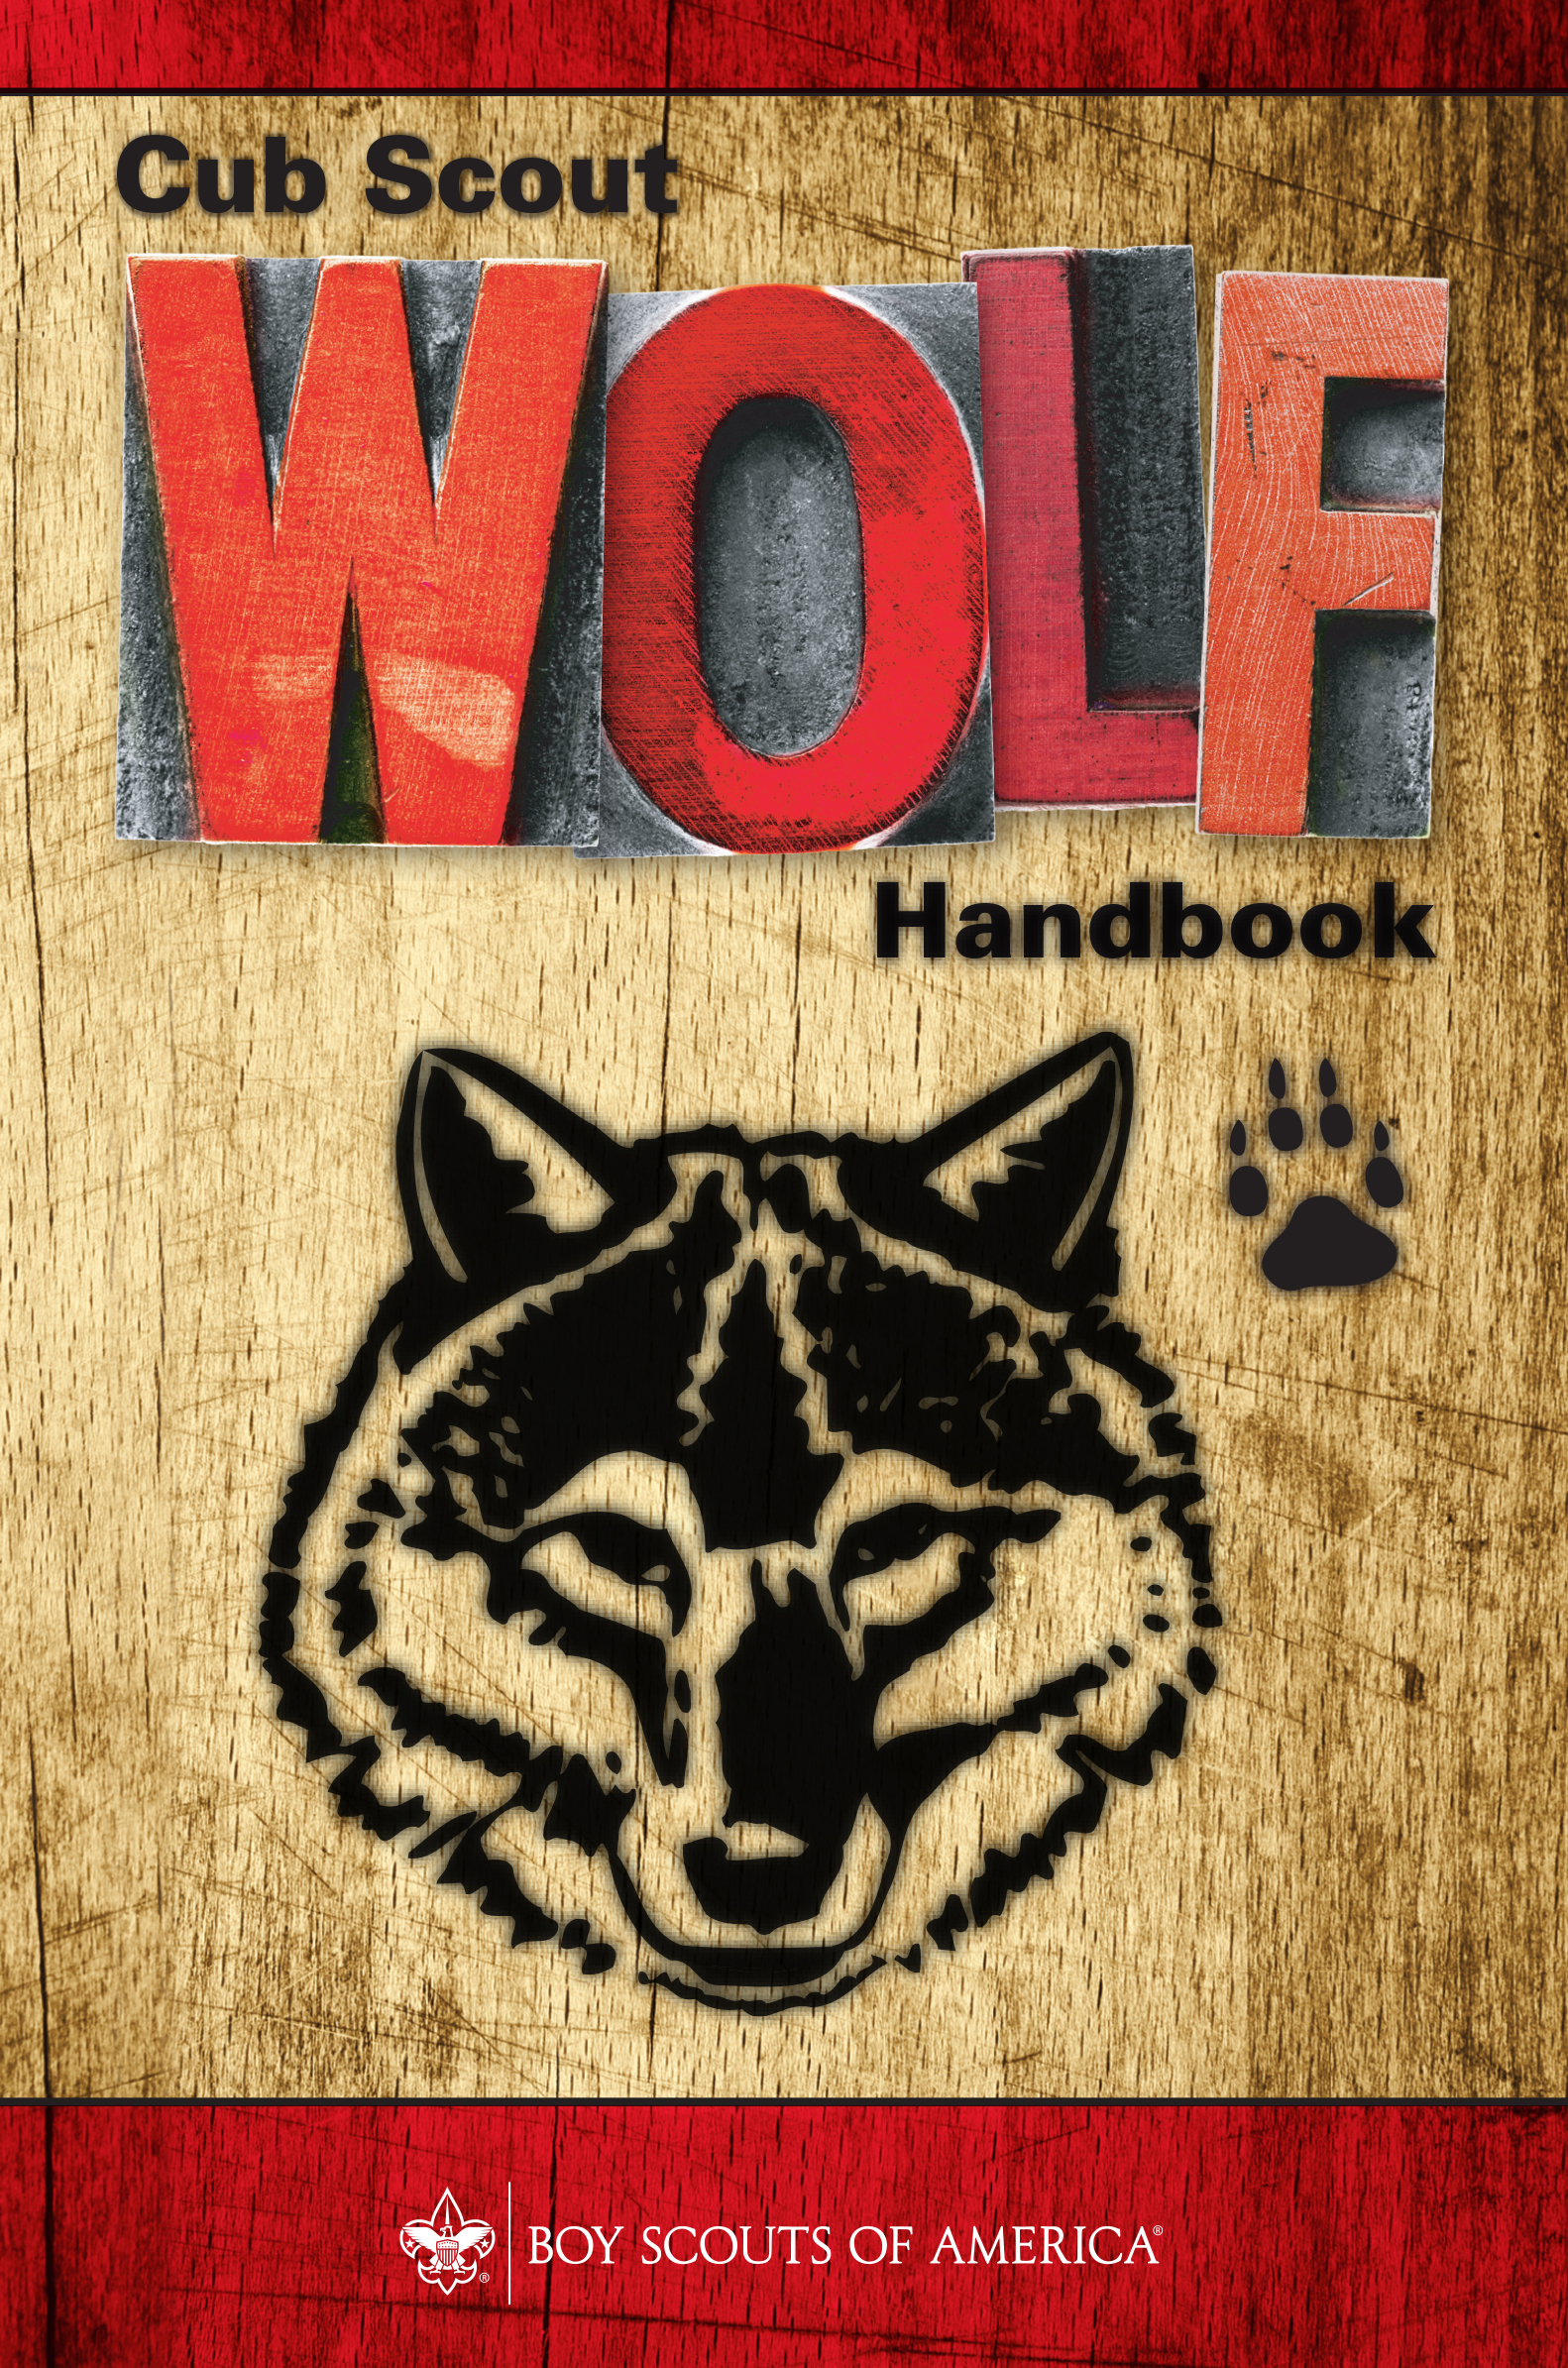 http://www.scouting.org/filestore/marketing/Brand/CubScouts/Youth%20Handbooks/Wolf%20Handbook.jpg